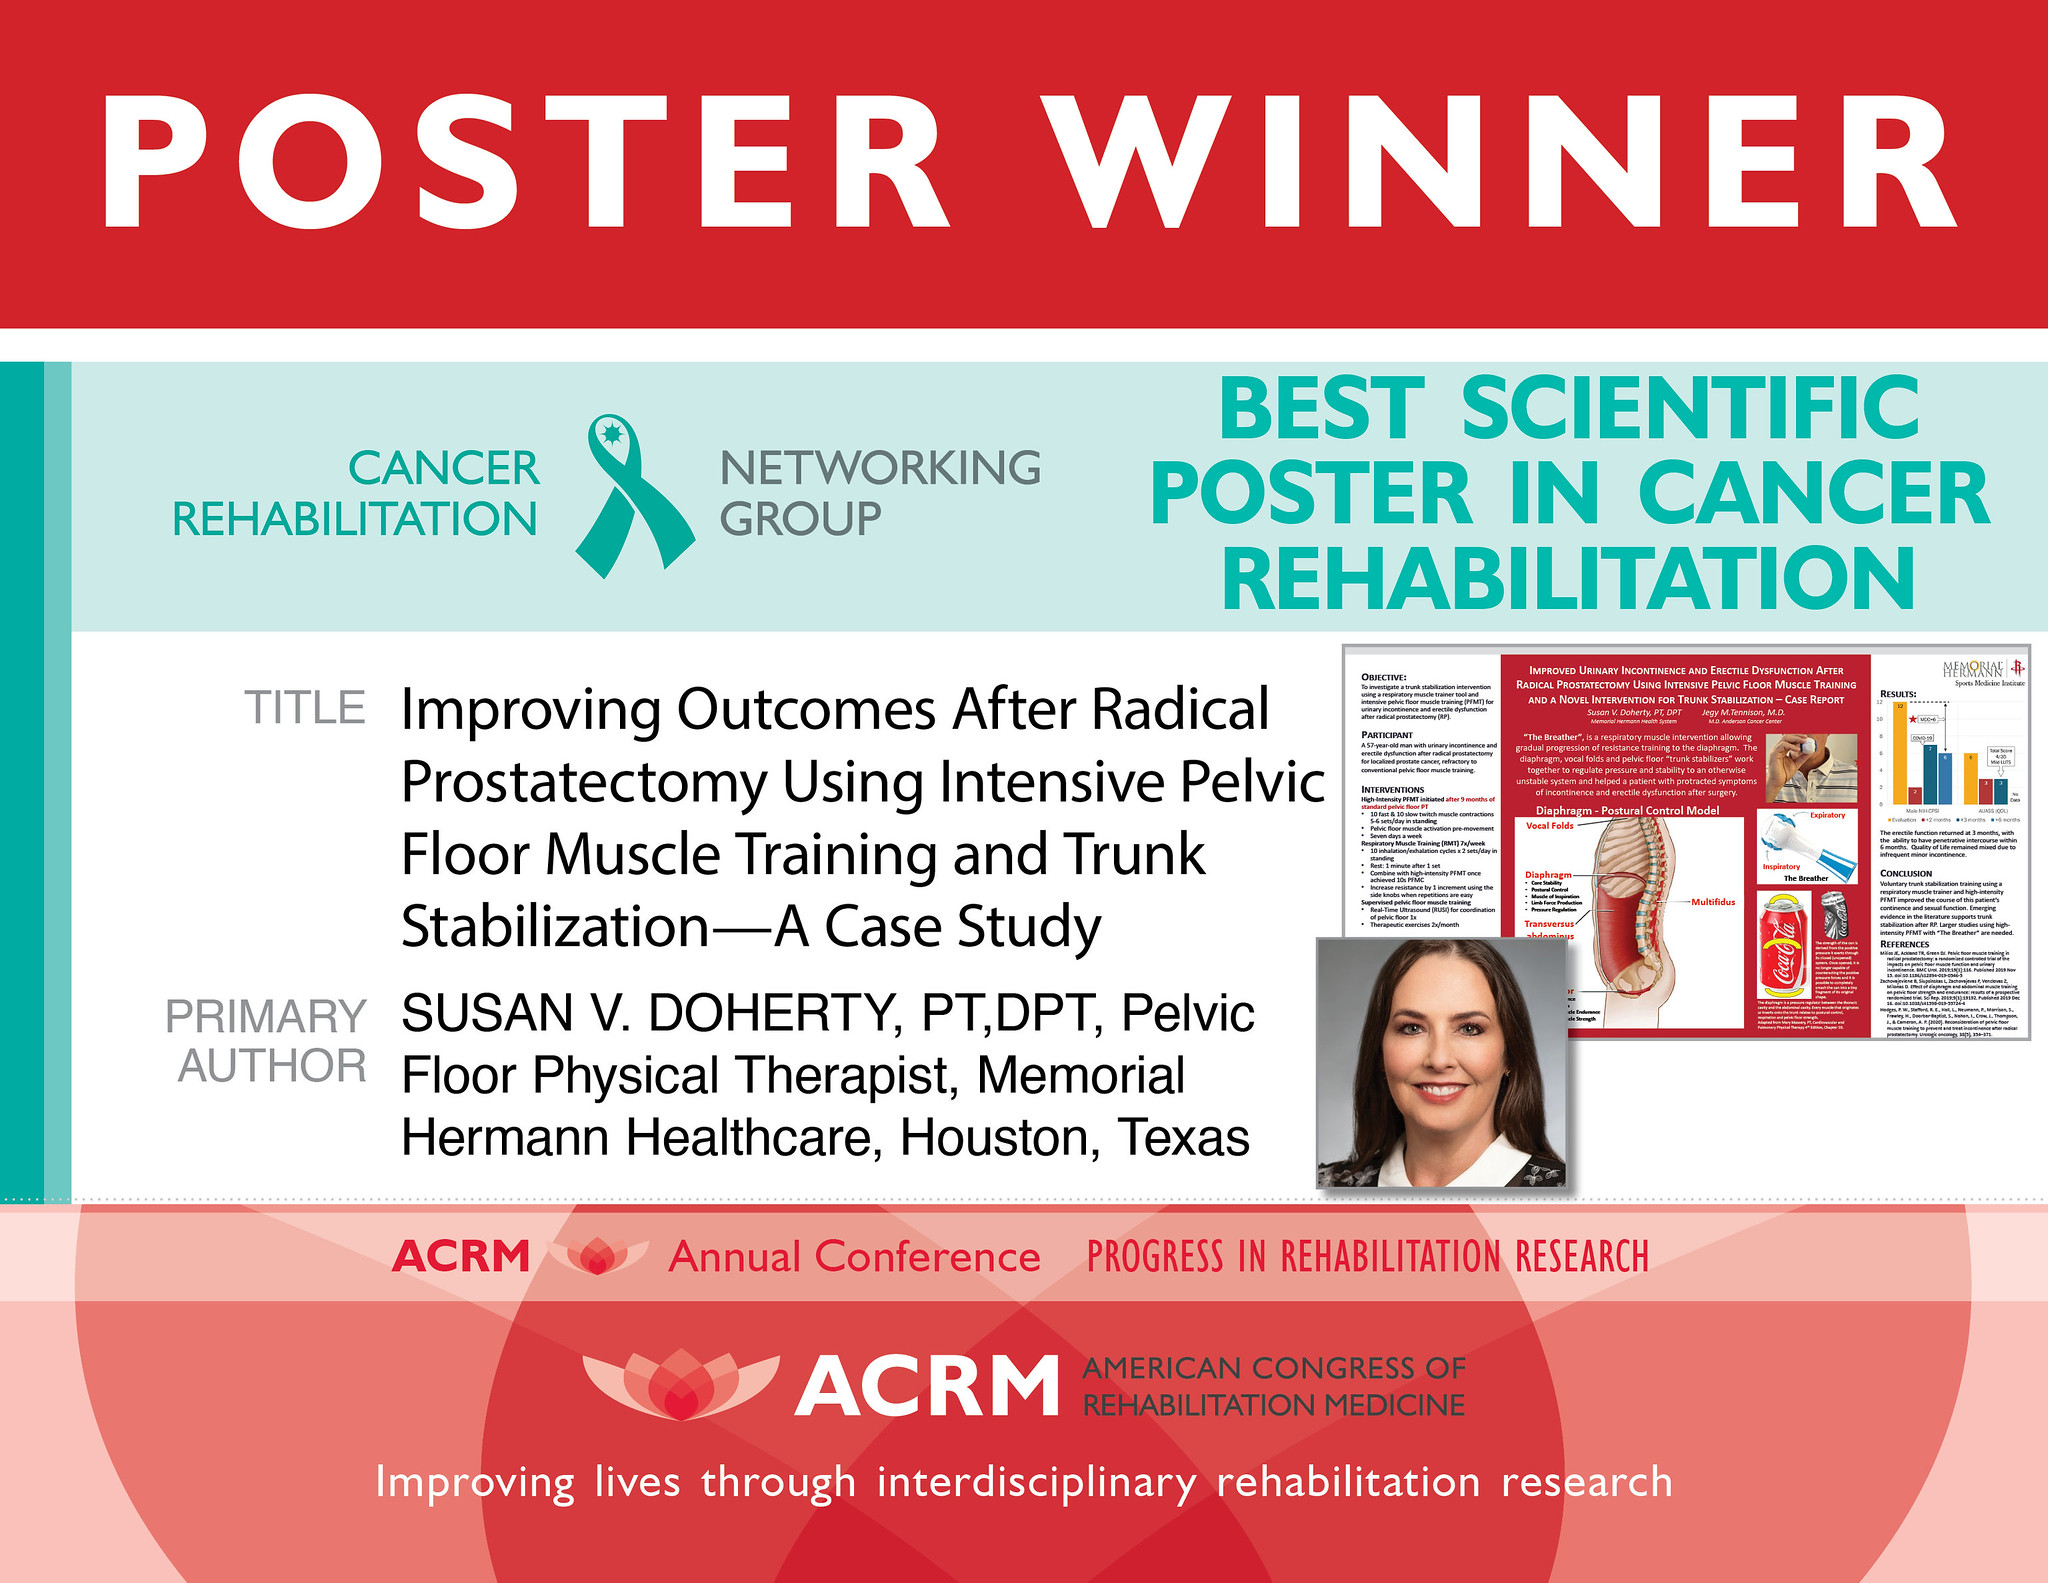 Best Scientific Poster in Cancer Rehabilitation